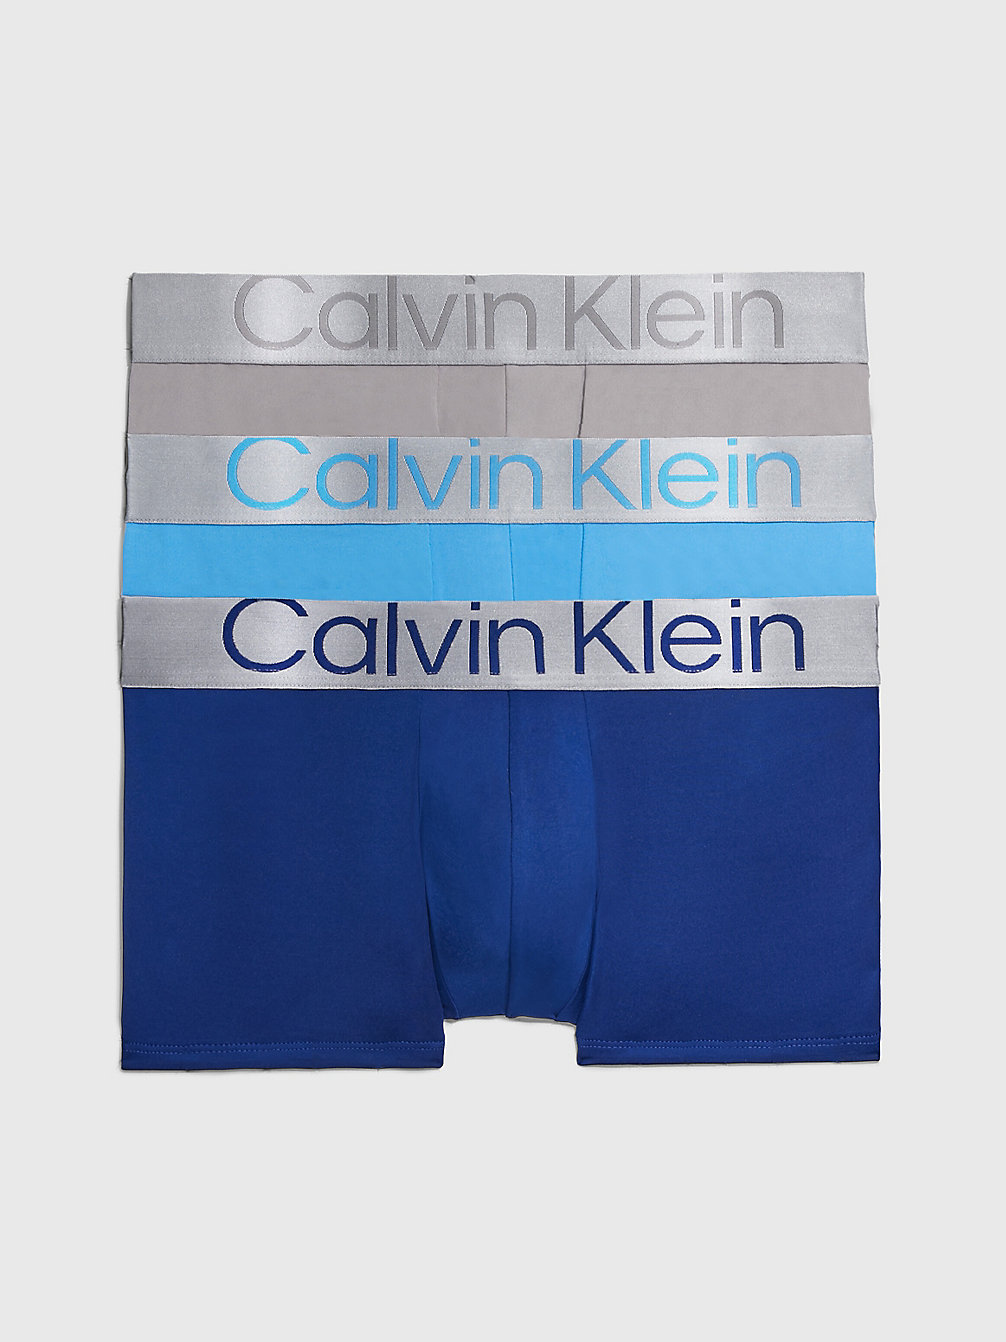 MID BLUE, SIGNATURE BLUE, CLAY GRY > Zestaw 3 Par Bokserek Z Niskim Stanem - Steel Micro > undefined Mężczyźni - Calvin Klein